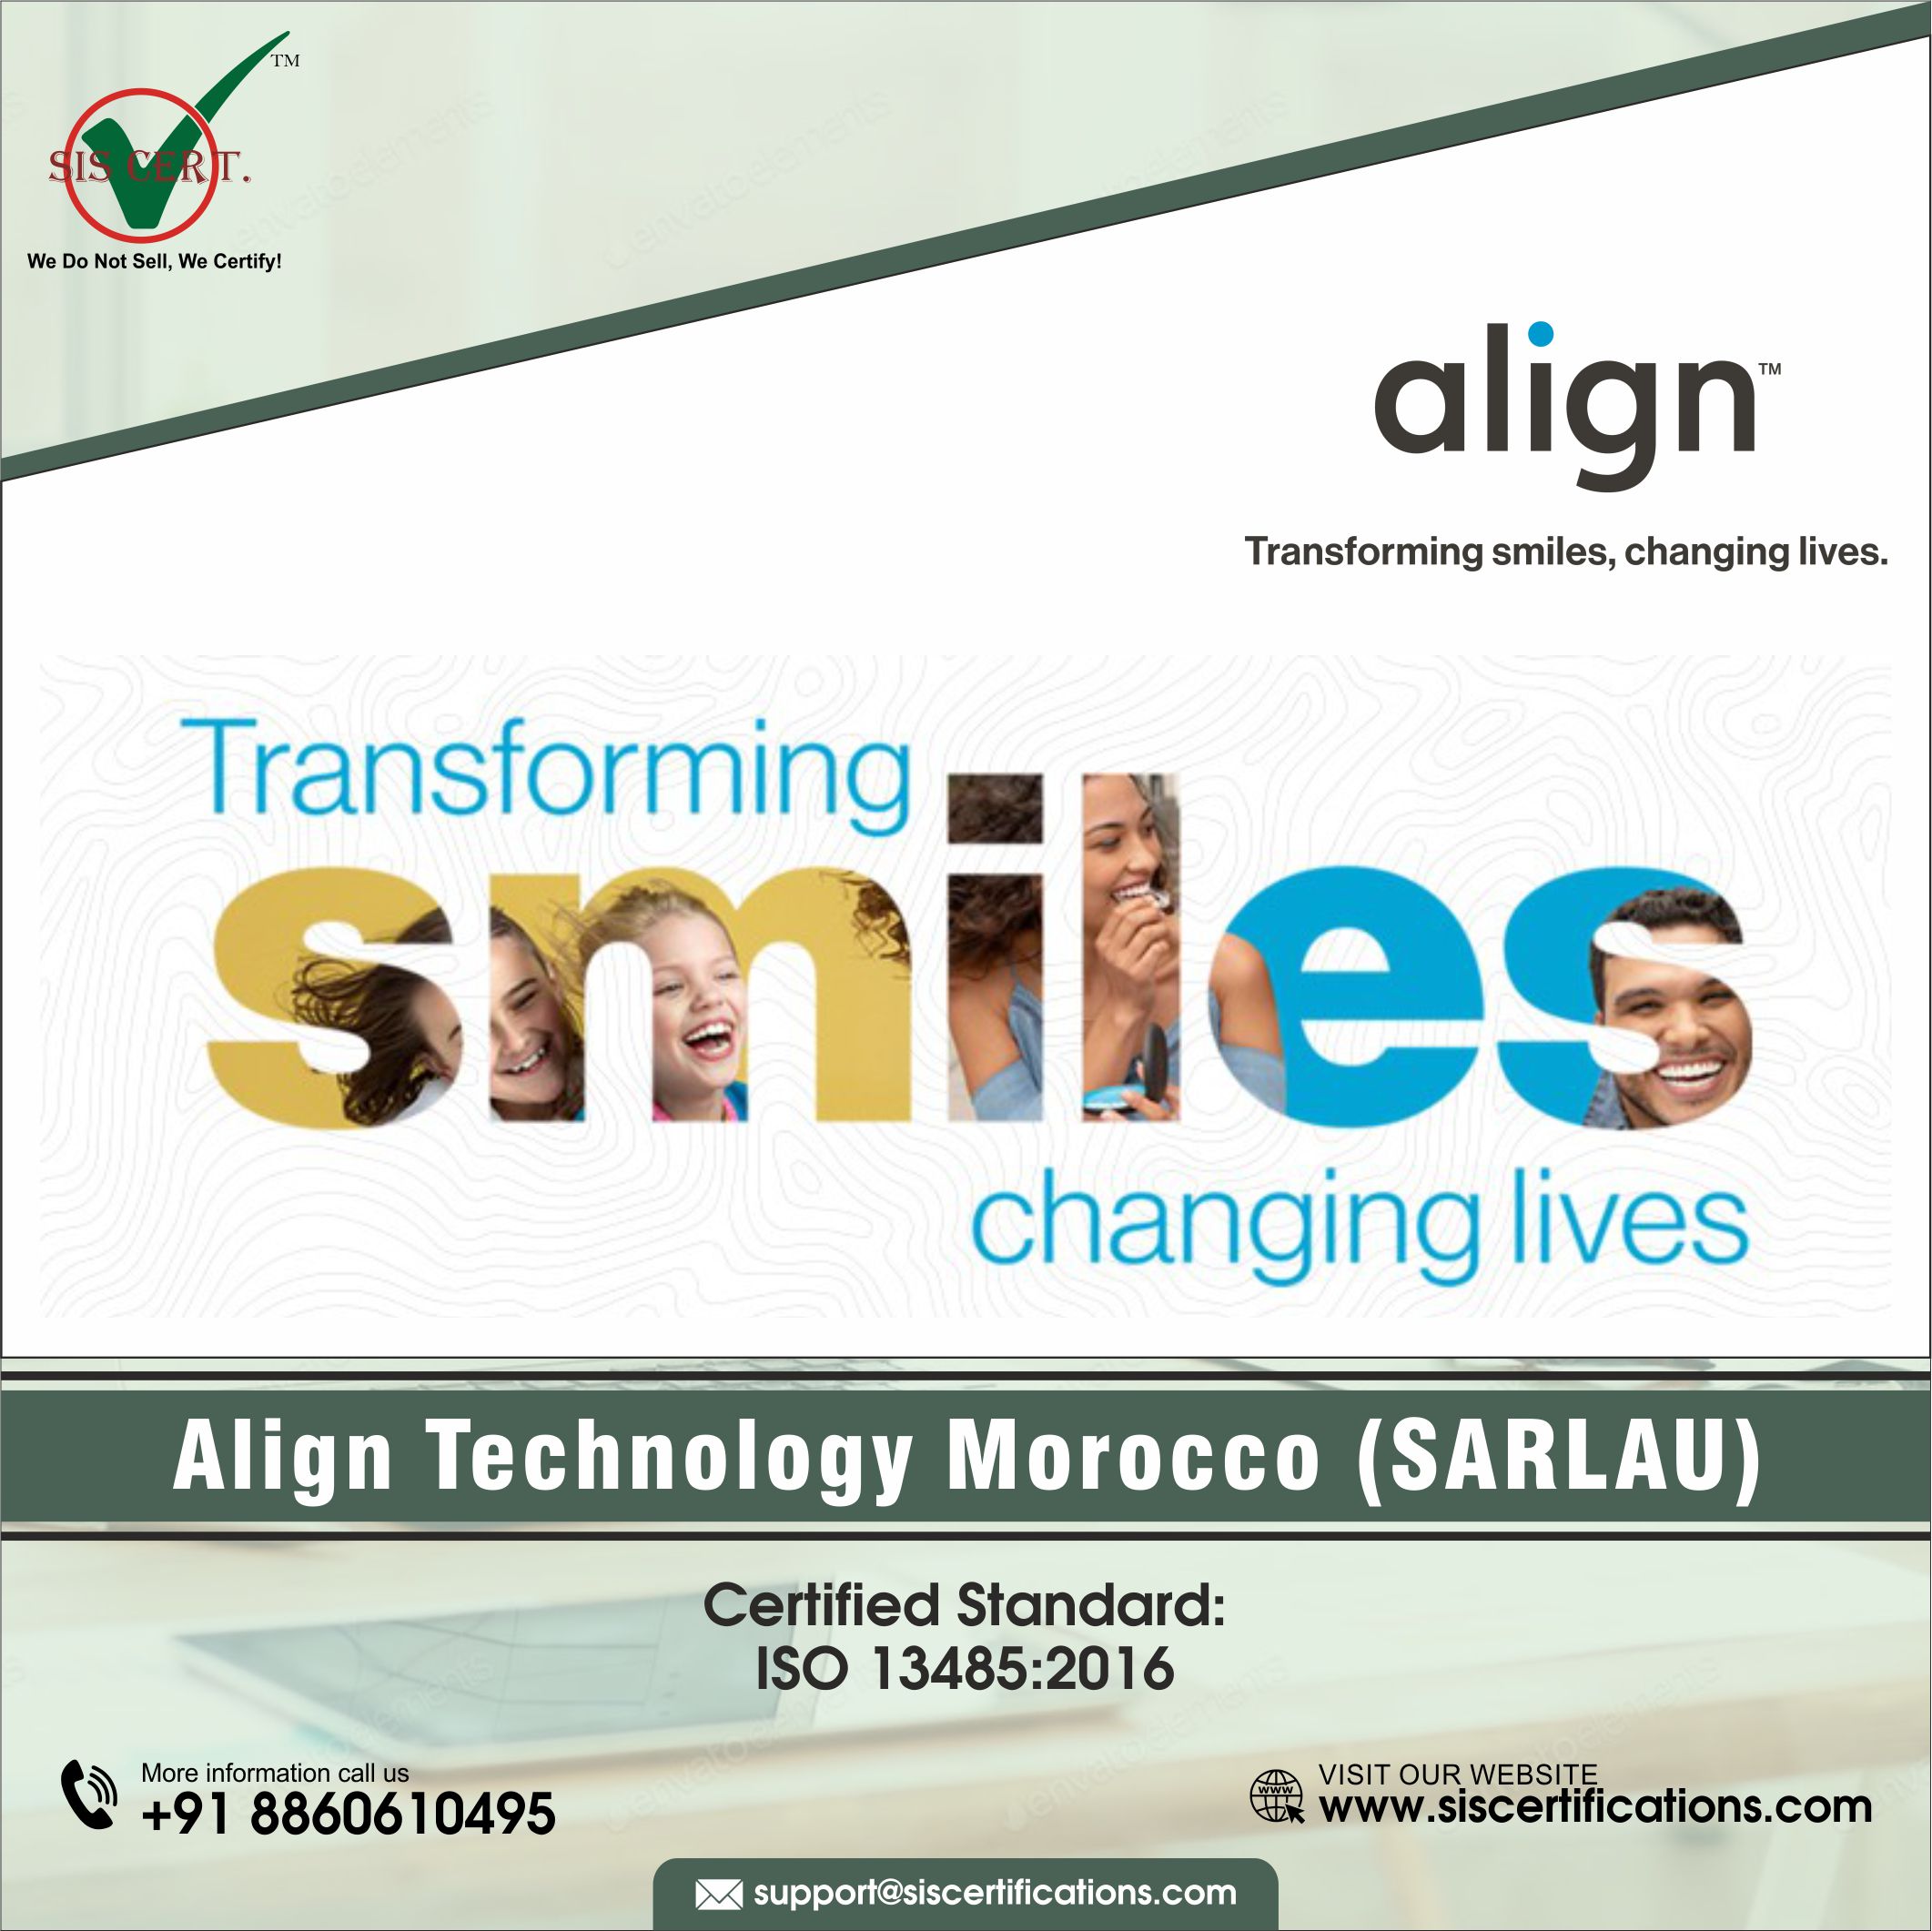 Align Technology Morocco (SARLAU) obtained ISO 13485